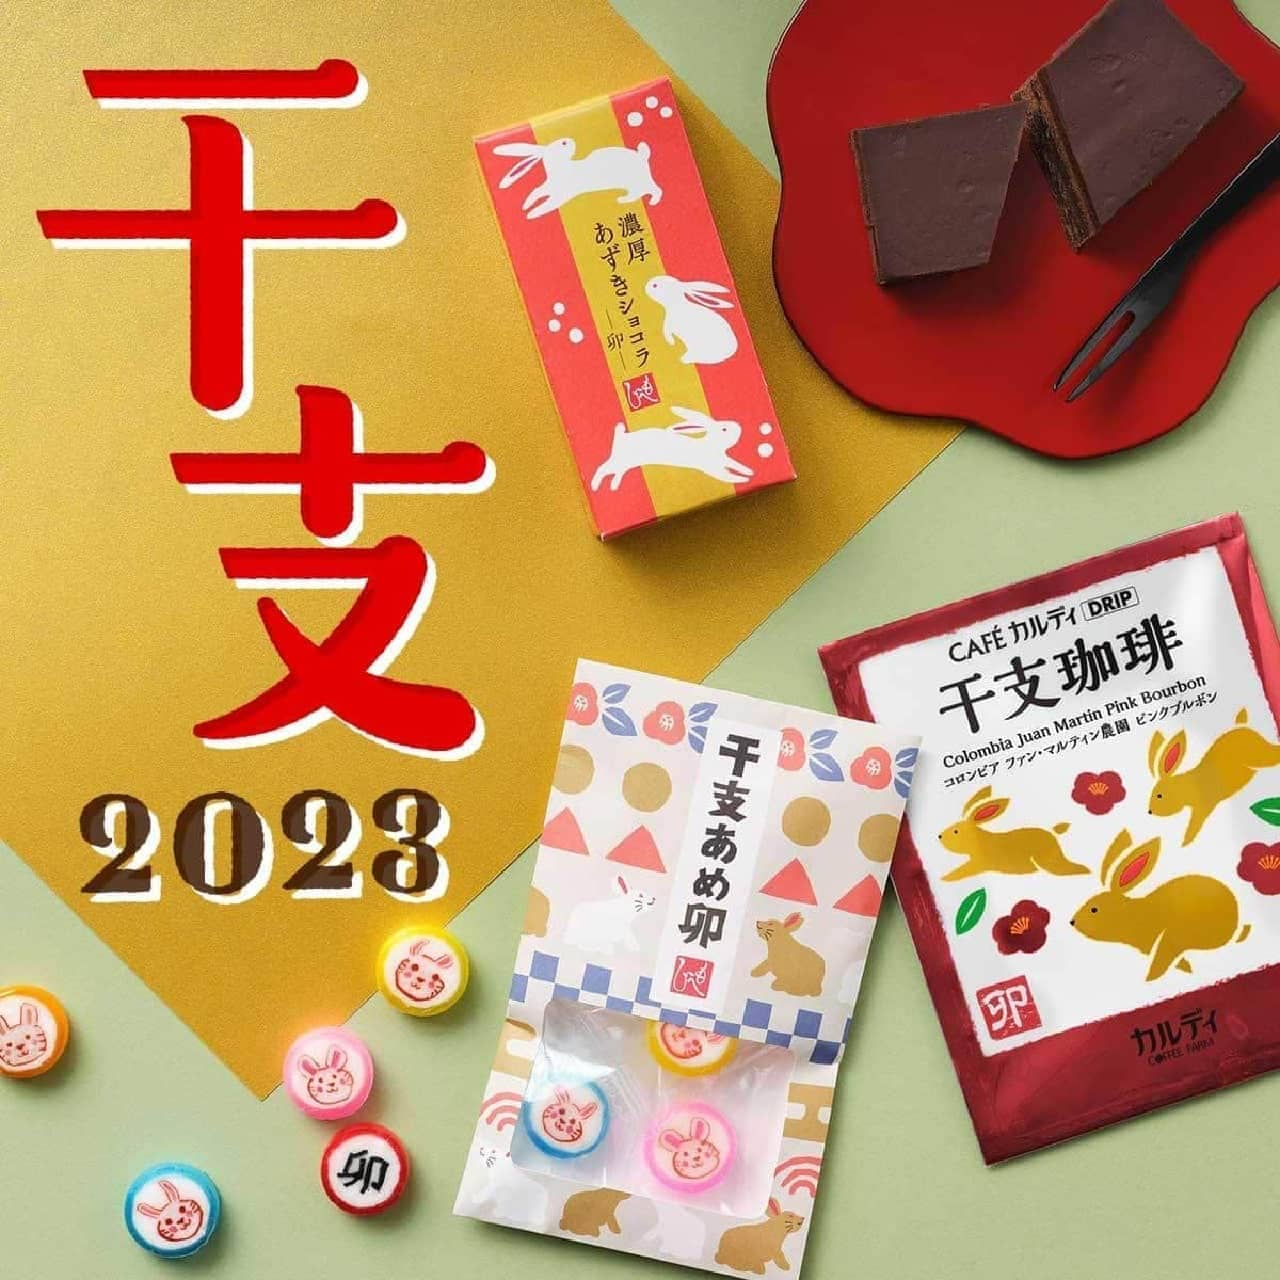 KALDI 2023: Zodiac sign (Rabbit) motif sweets and coffee